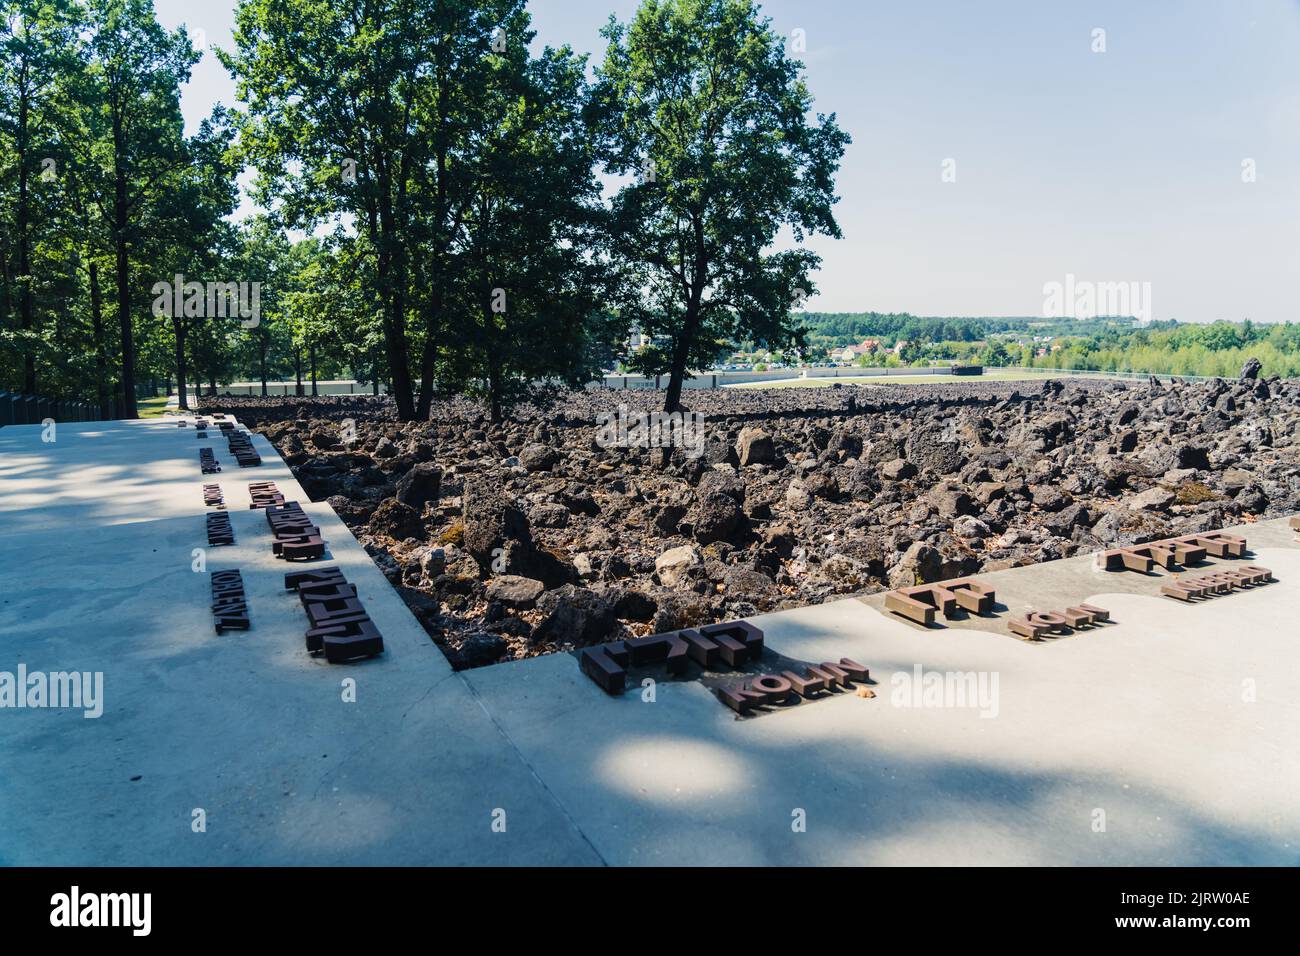 08.27.2022 - Belzec, Poland - Belzec Nazi Death Camp. Stone ruins on former nazi death camp ground. Hebrew writing on concrete paths. Holocaust memorial. Horizontal shot. High quality photo Stock Photo